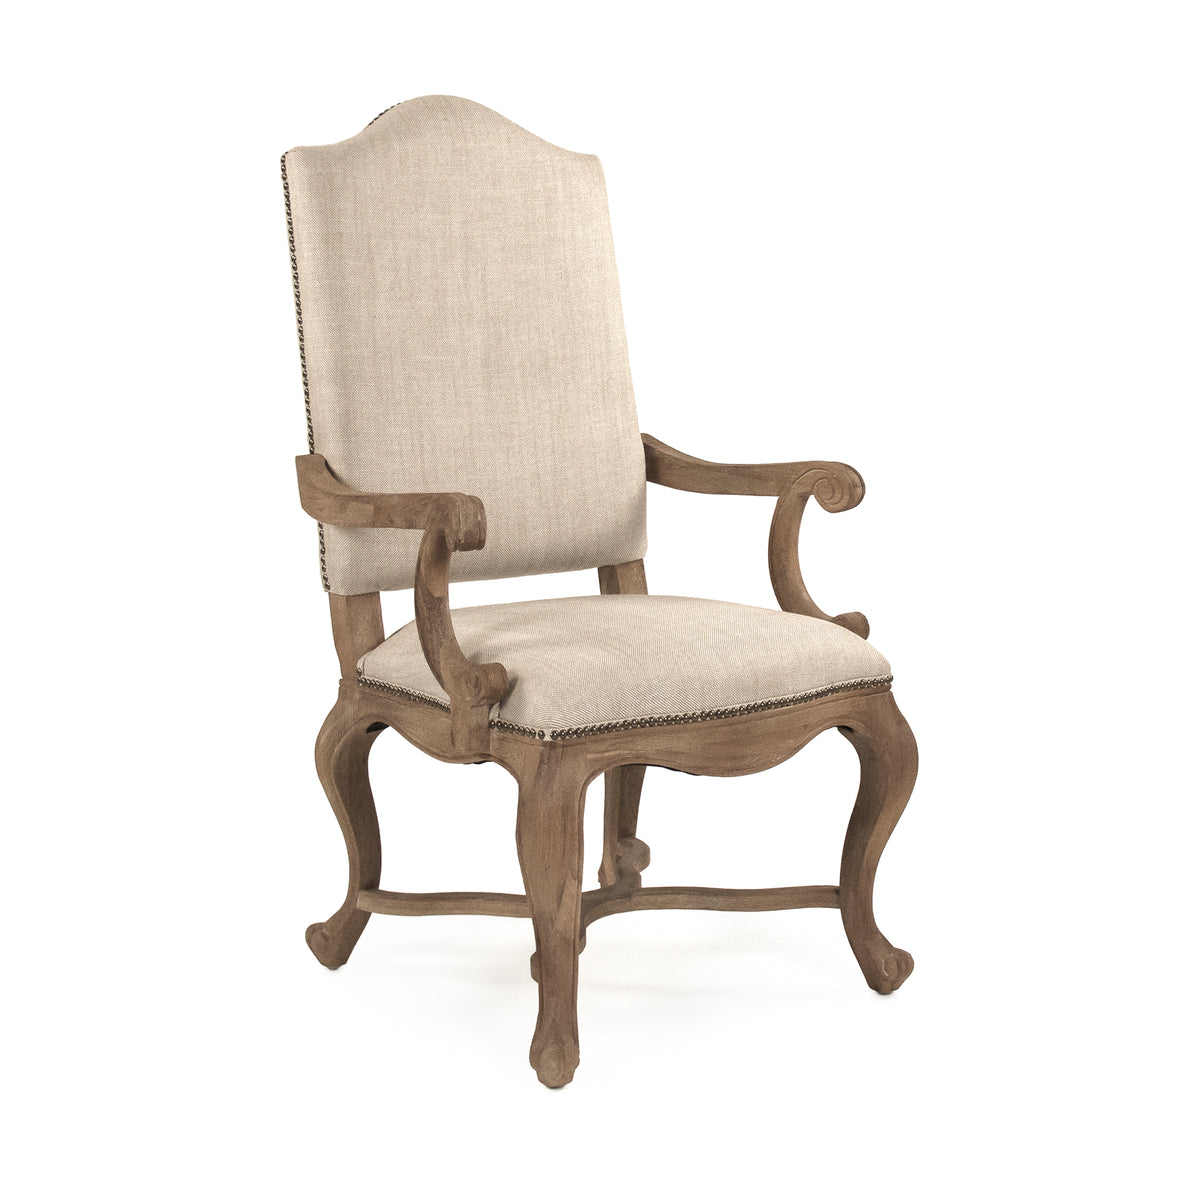 Grayson Arm Chair by Zentique